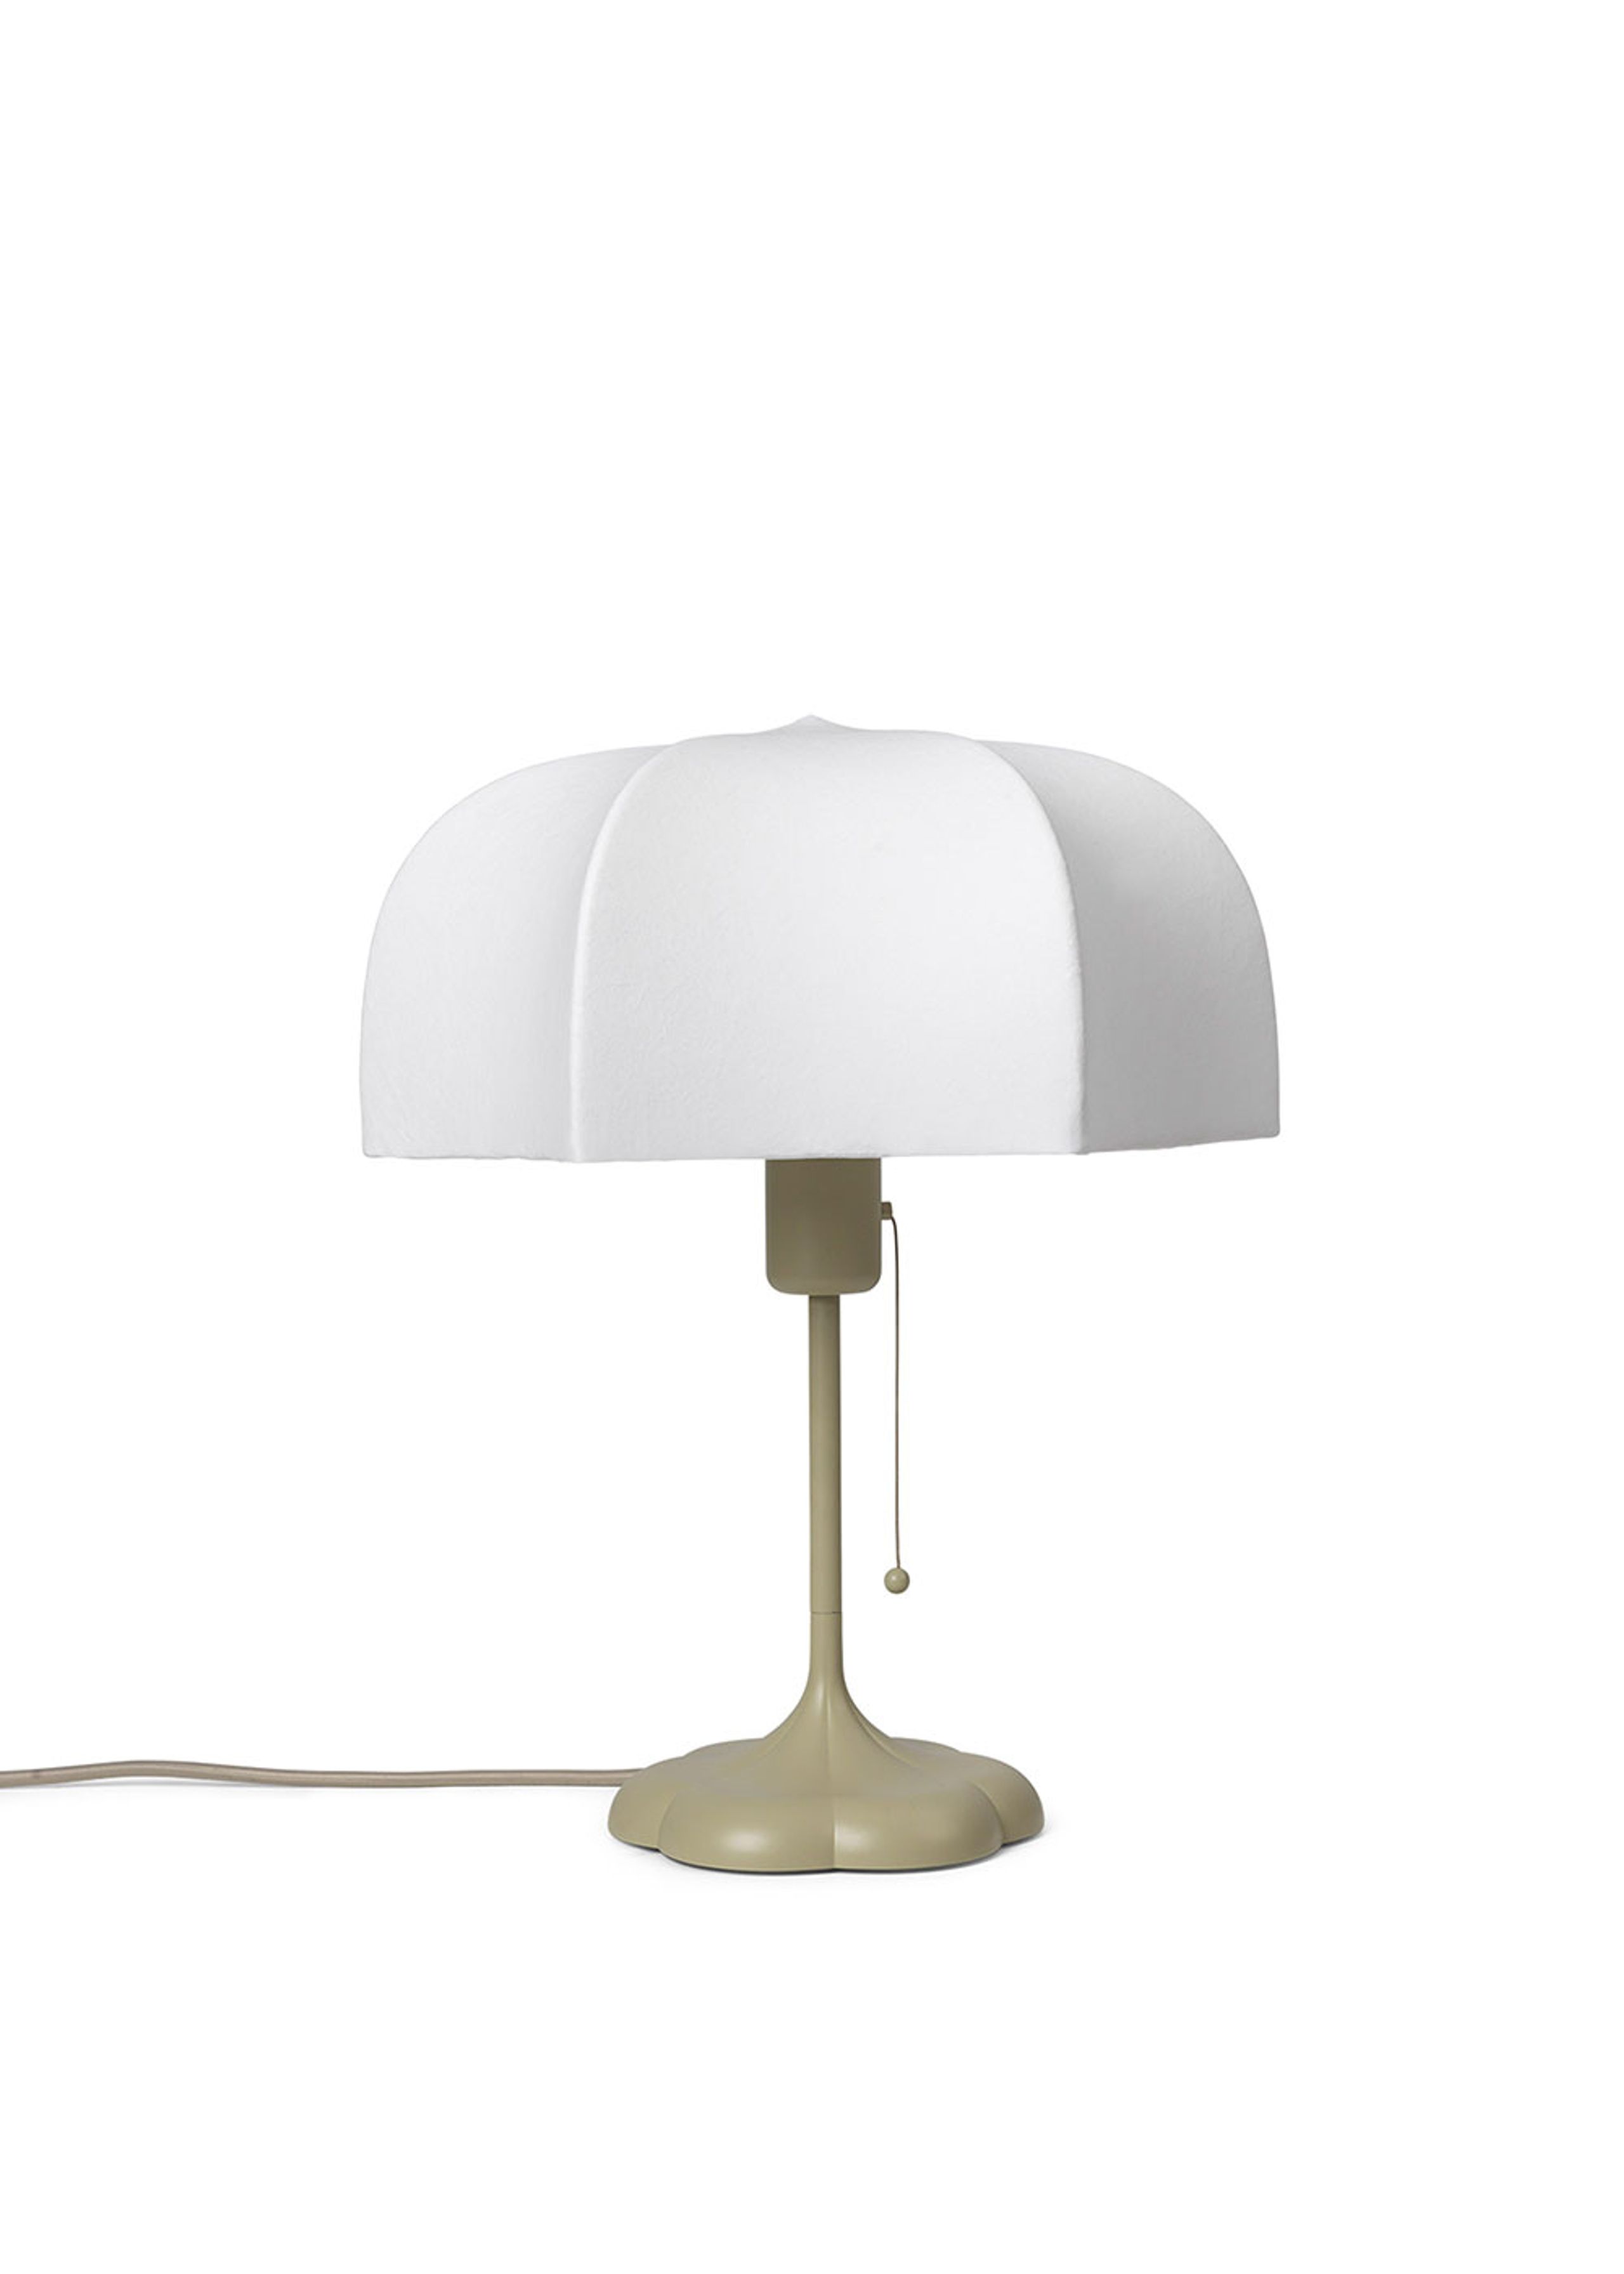 Ferm Living - Tischlampe - Poem Table Lamp - White/Cashmere